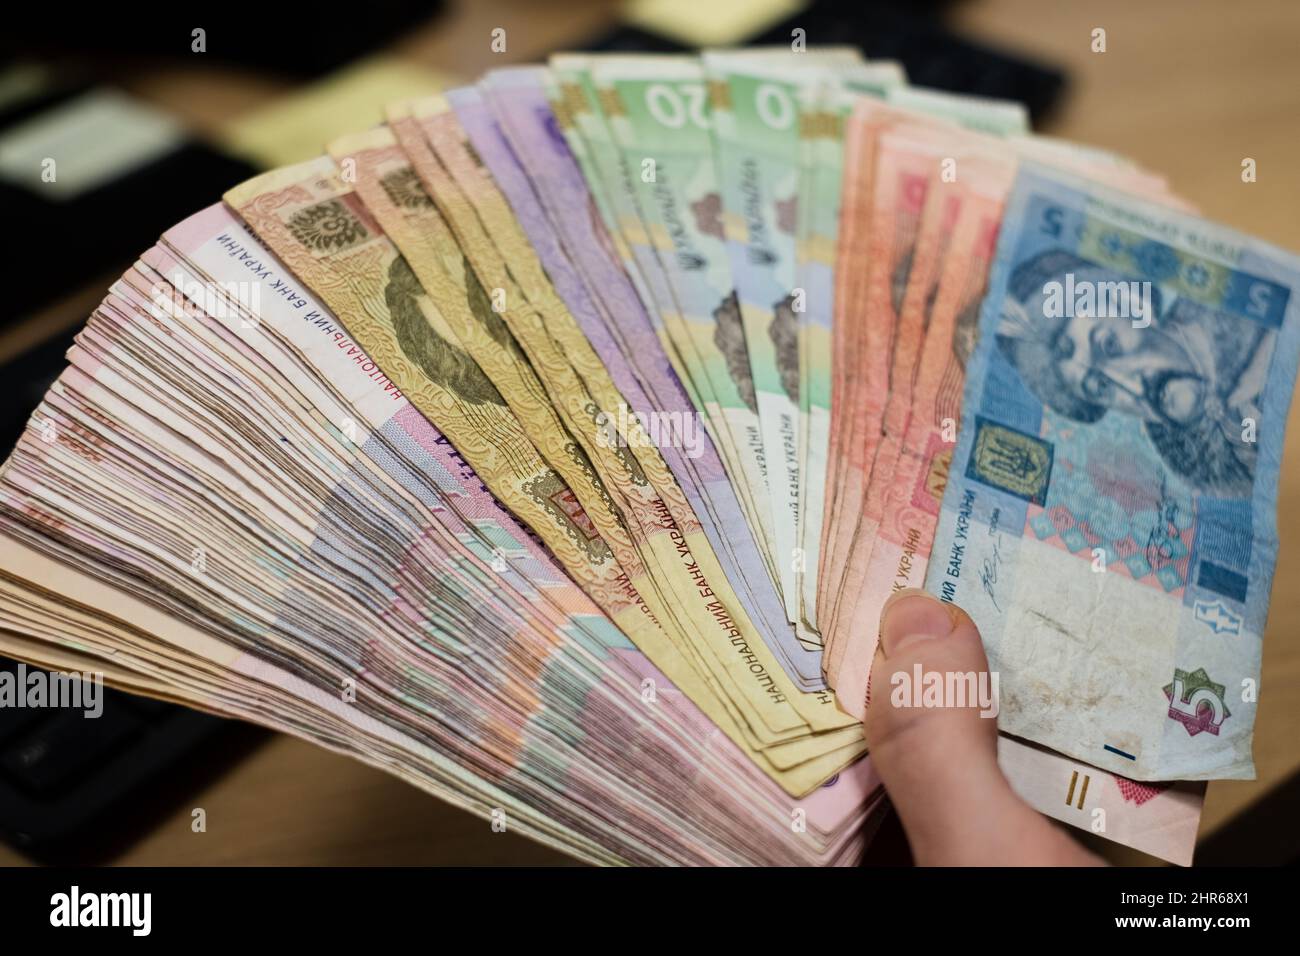 Ukrainian money Ukraine hryvnia paper notes (UAH). Large pile of Ukraine grivna cash. Ukraine’s banking system and economy crisis concept. Stock Photo